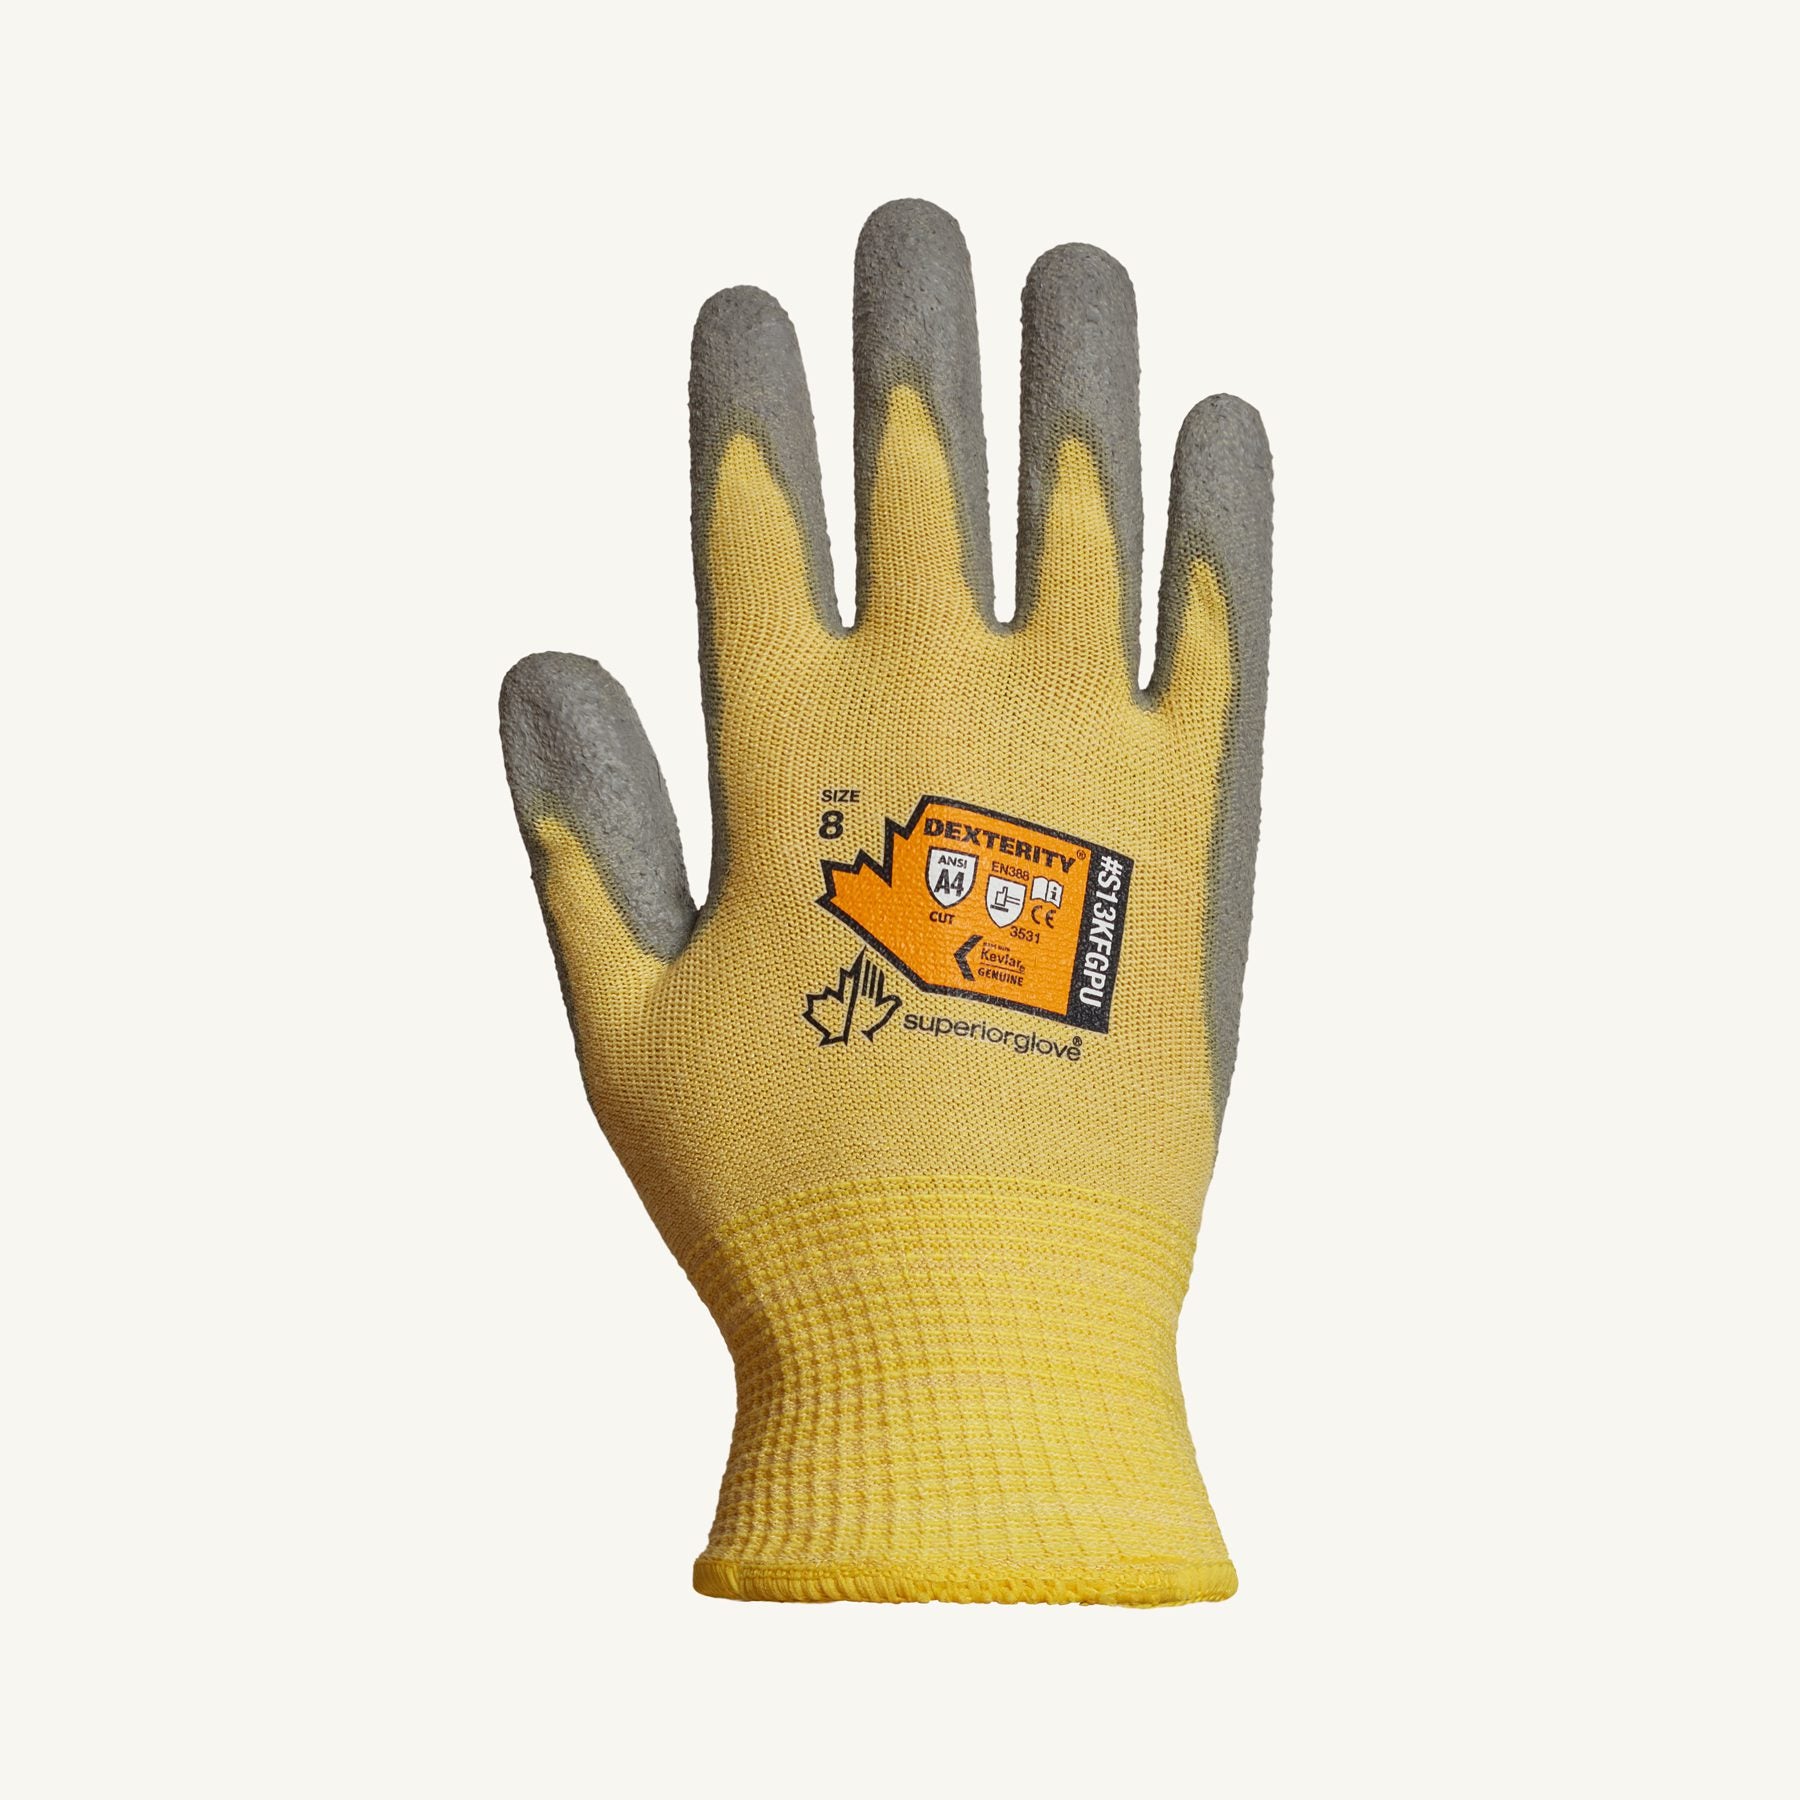 Superior Glove Cut-Resistant Gloves with Blended Kevlar and Polyurethane Palms - 13-Gauge (Size 10)